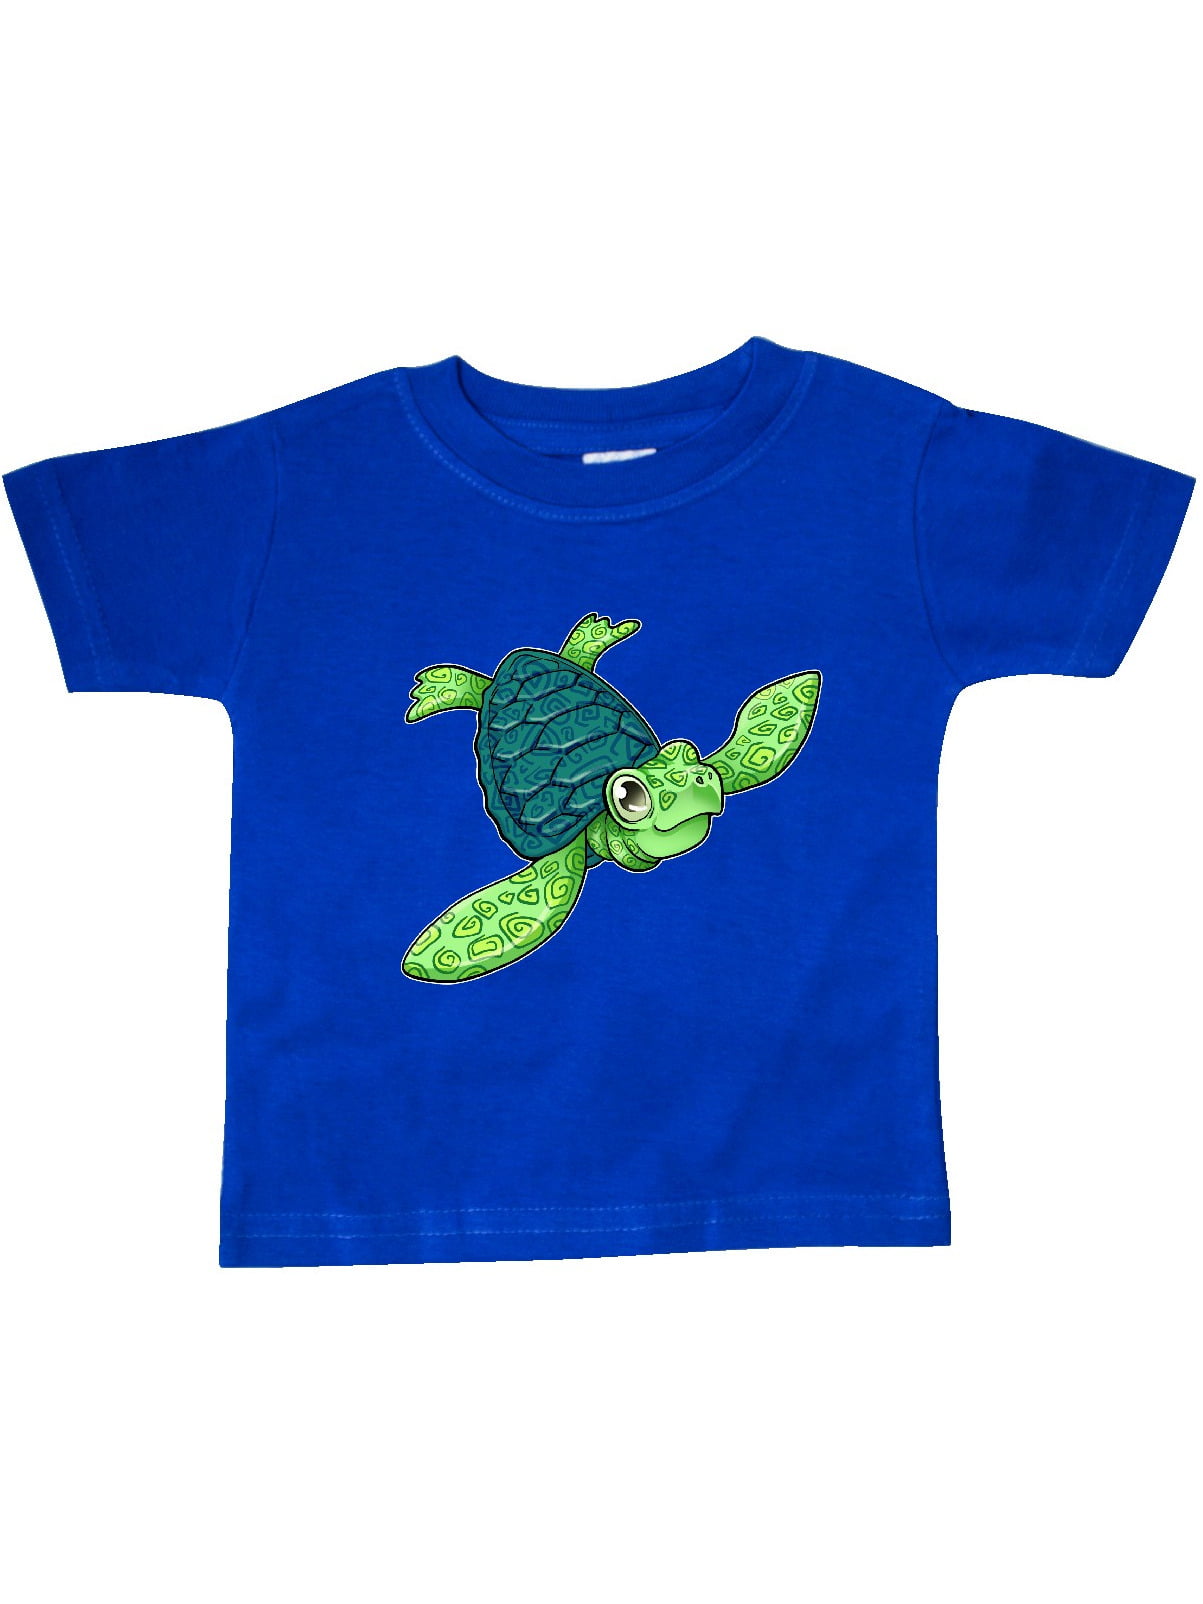 Sea Turtle with swirls Baby T-Shirt - Walmart.com - Walmart.com